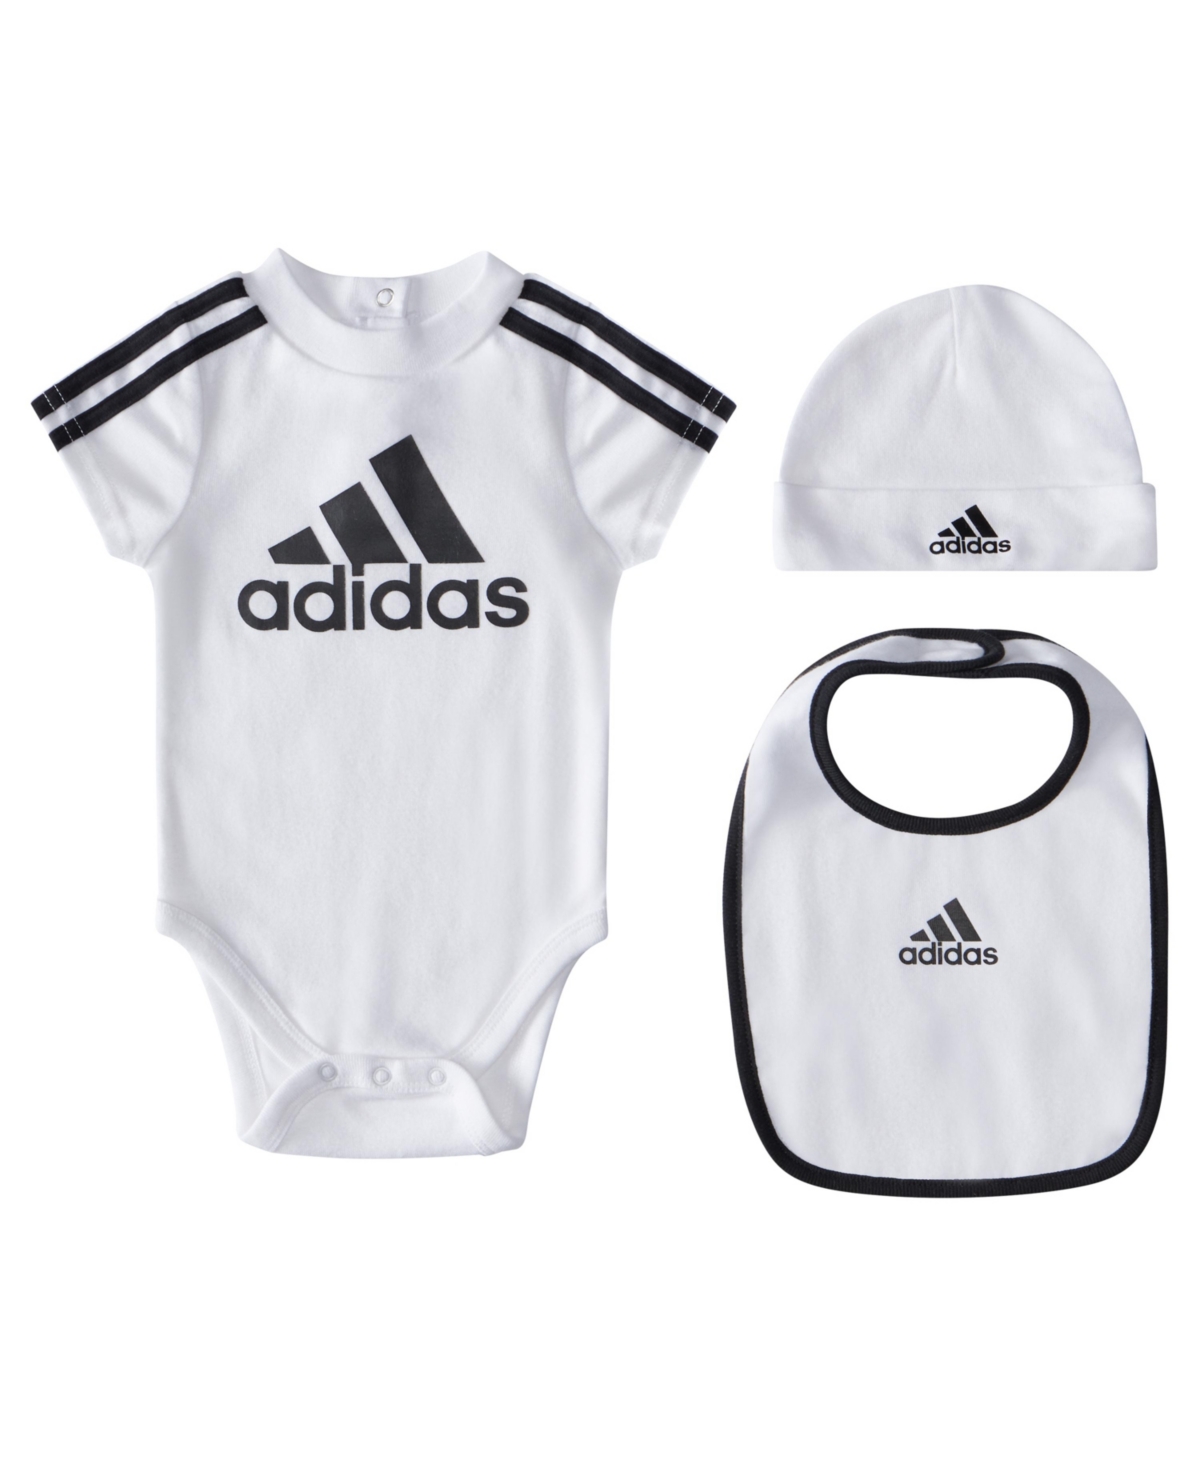 adidas Baby Boys or Baby Girls Short Sleeve Classic 3-Stripes Box Gift Set